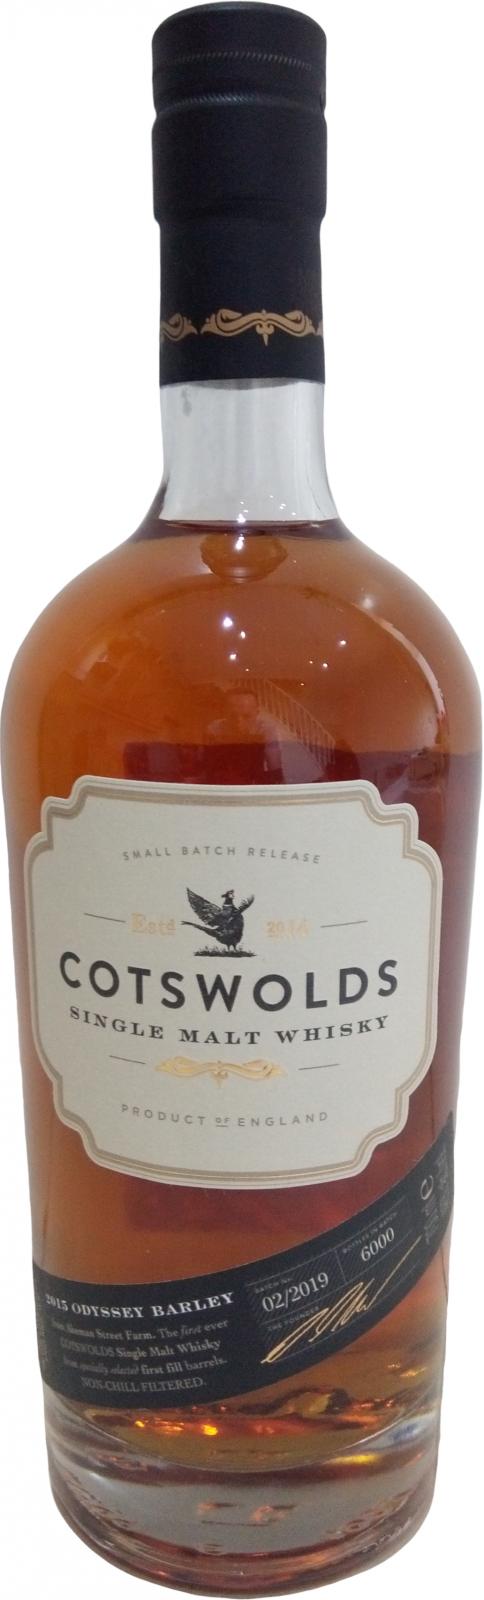 Cotswolds Distillery 2015 Odyssey Barley Batch 02/2019 46% 700ml